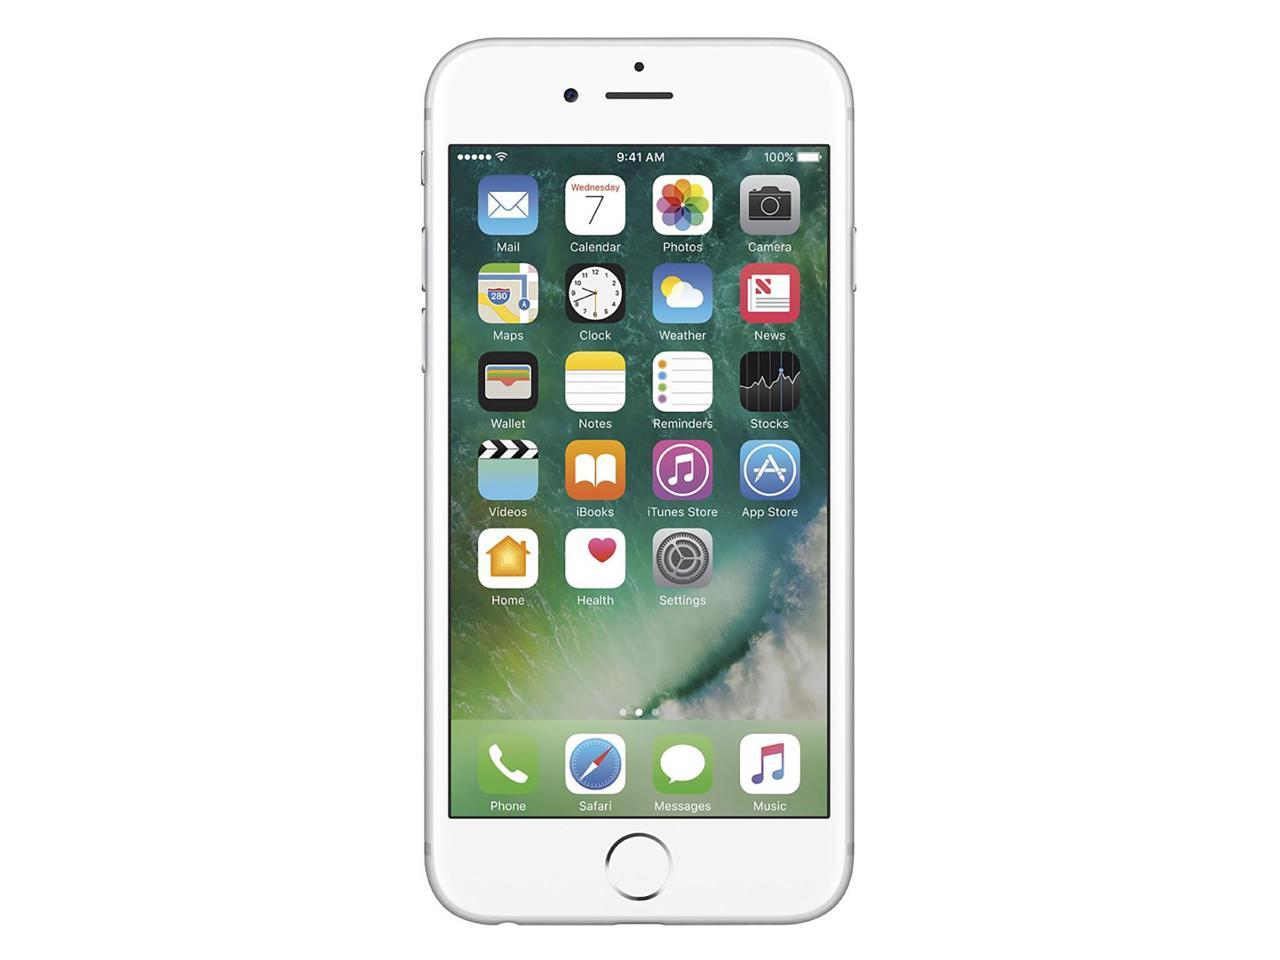 Apple iPhone 6s 16GB Unlocked GSM 4G LTE Dual-Core Phone w/ 12MP Camera - Silver